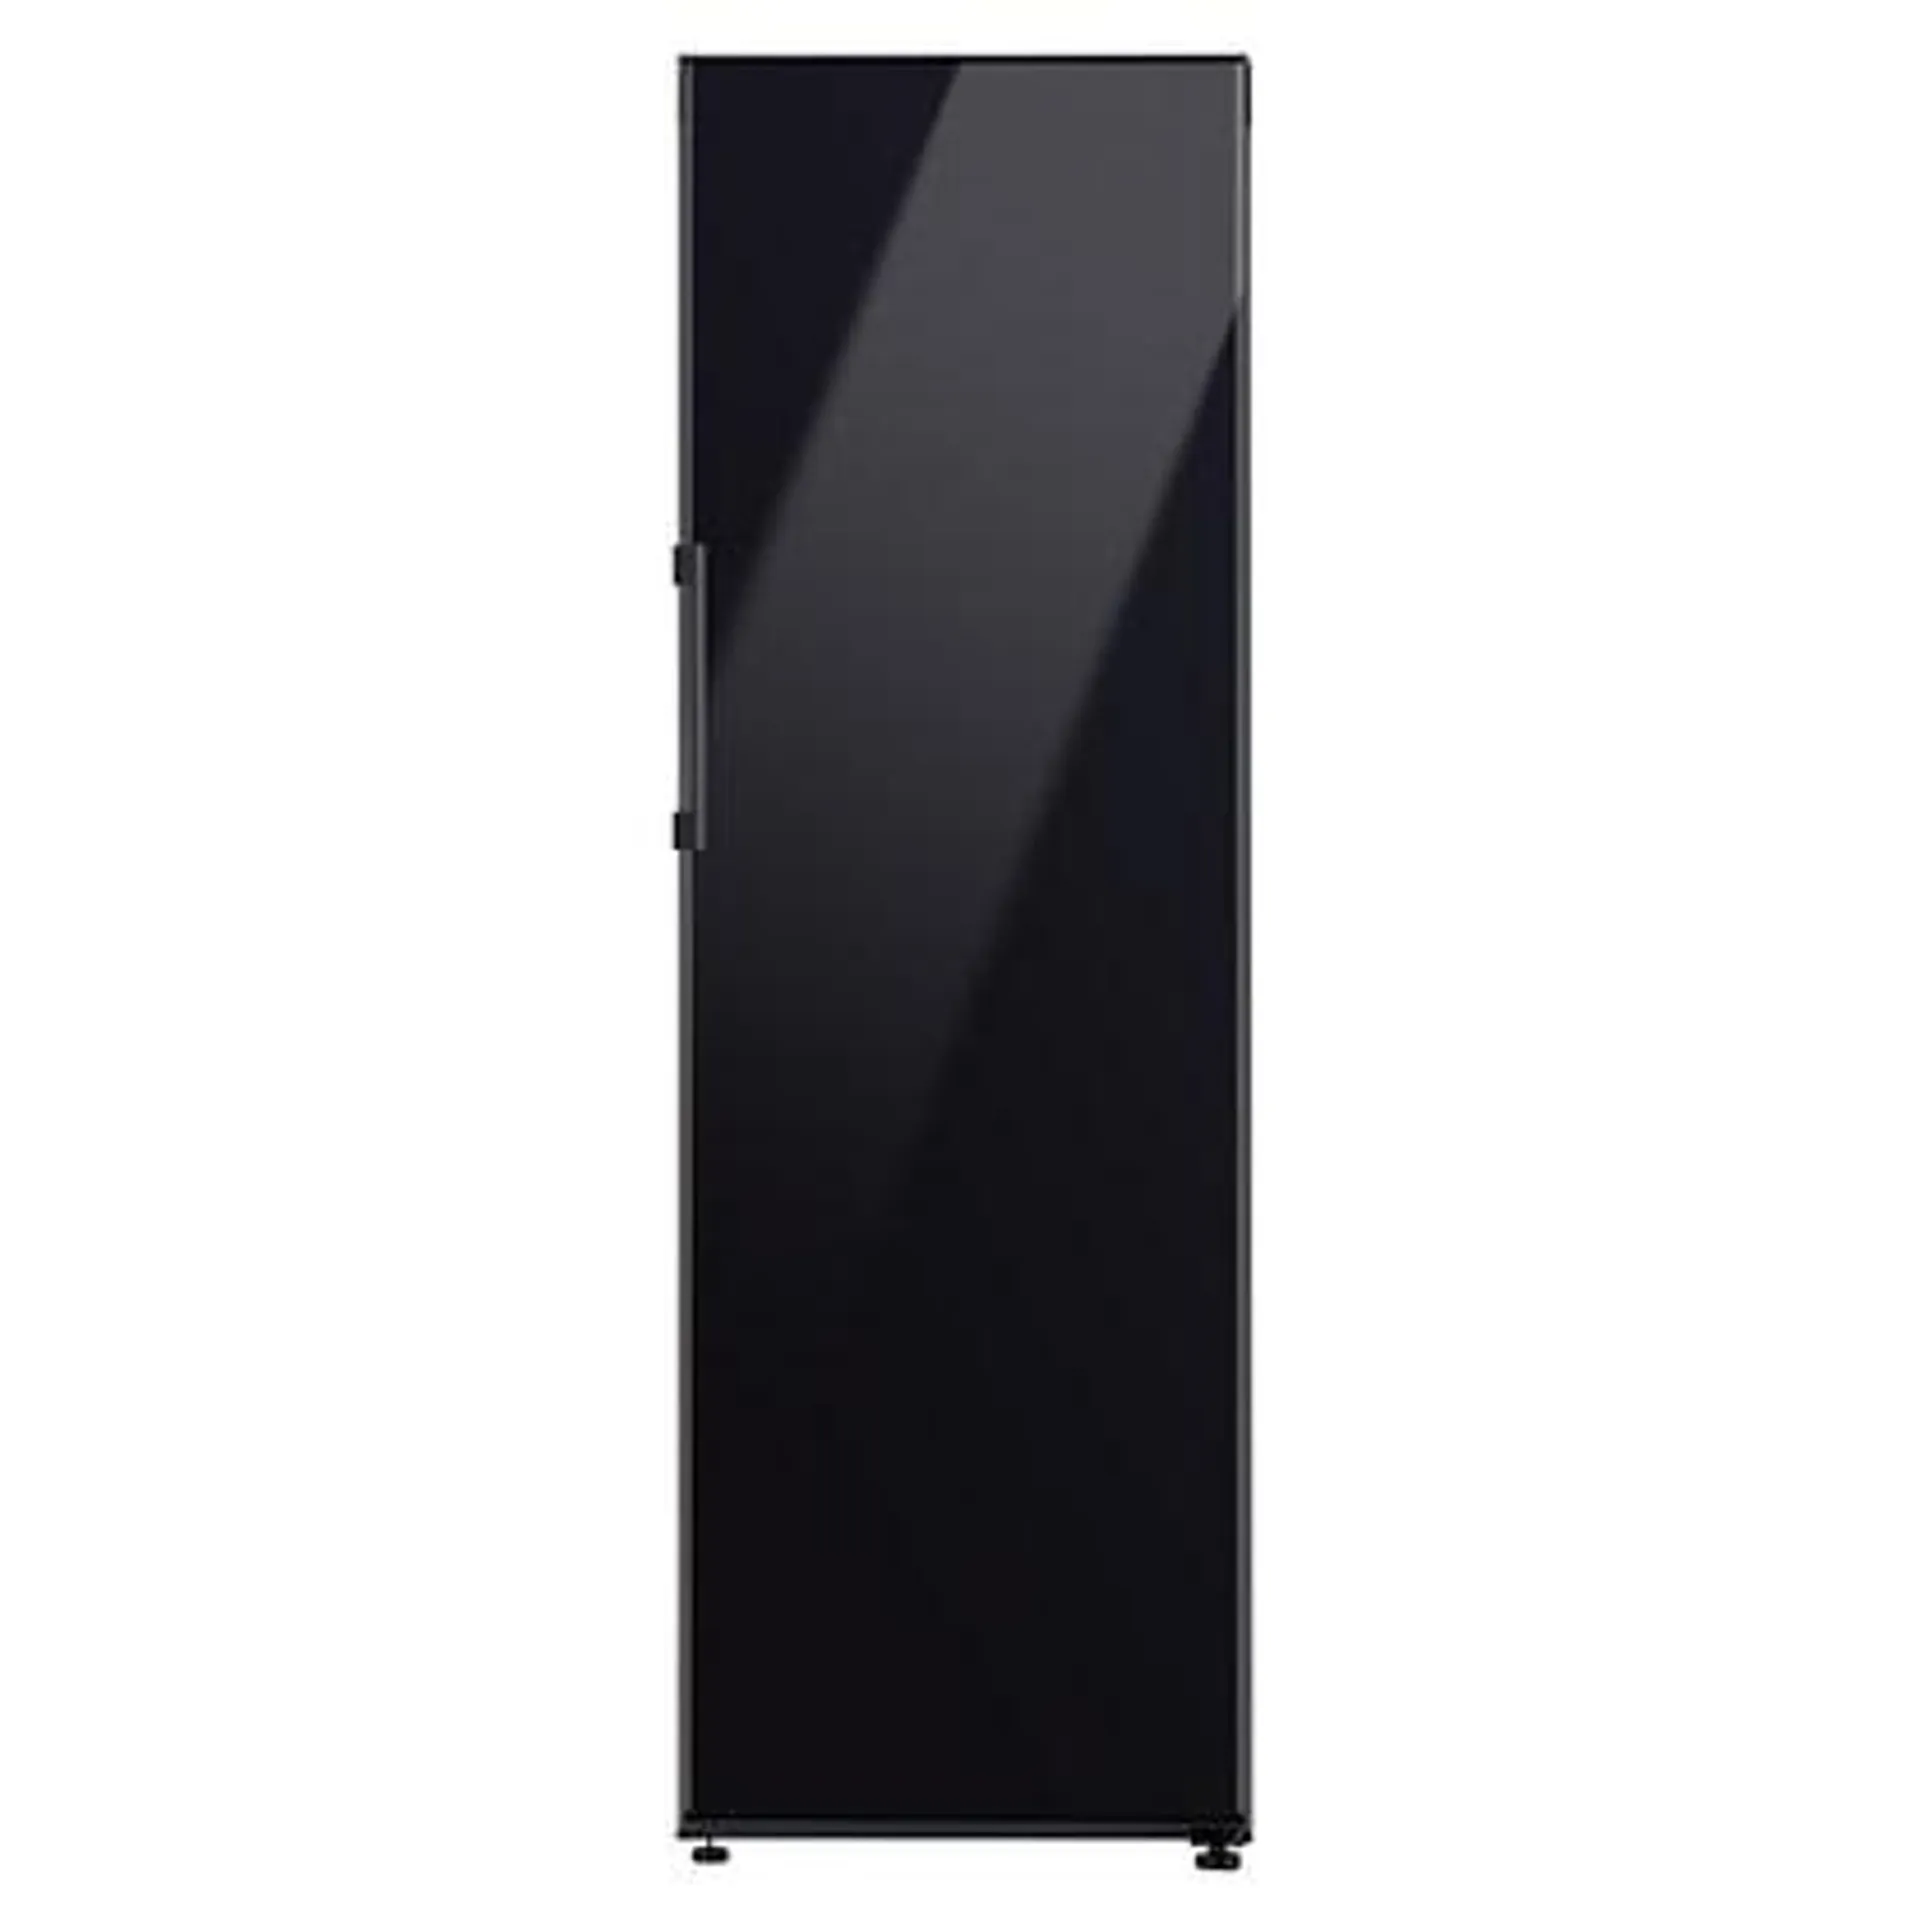 Samsung RR39A74A322 60cm BEspoke Freestanding Larder Fridge – BLACK